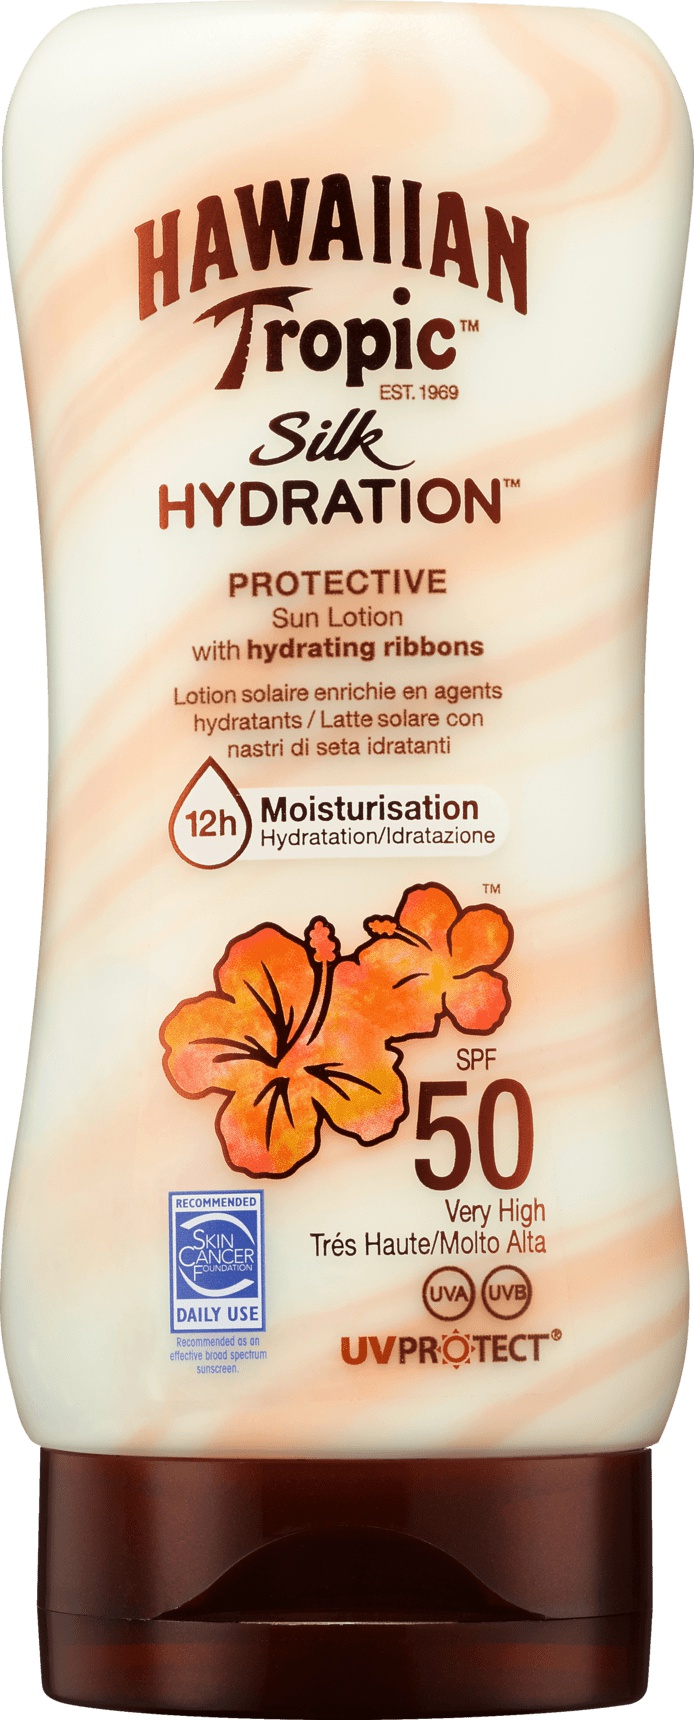 Hawaiian Tropic Silk Hydration spf 50